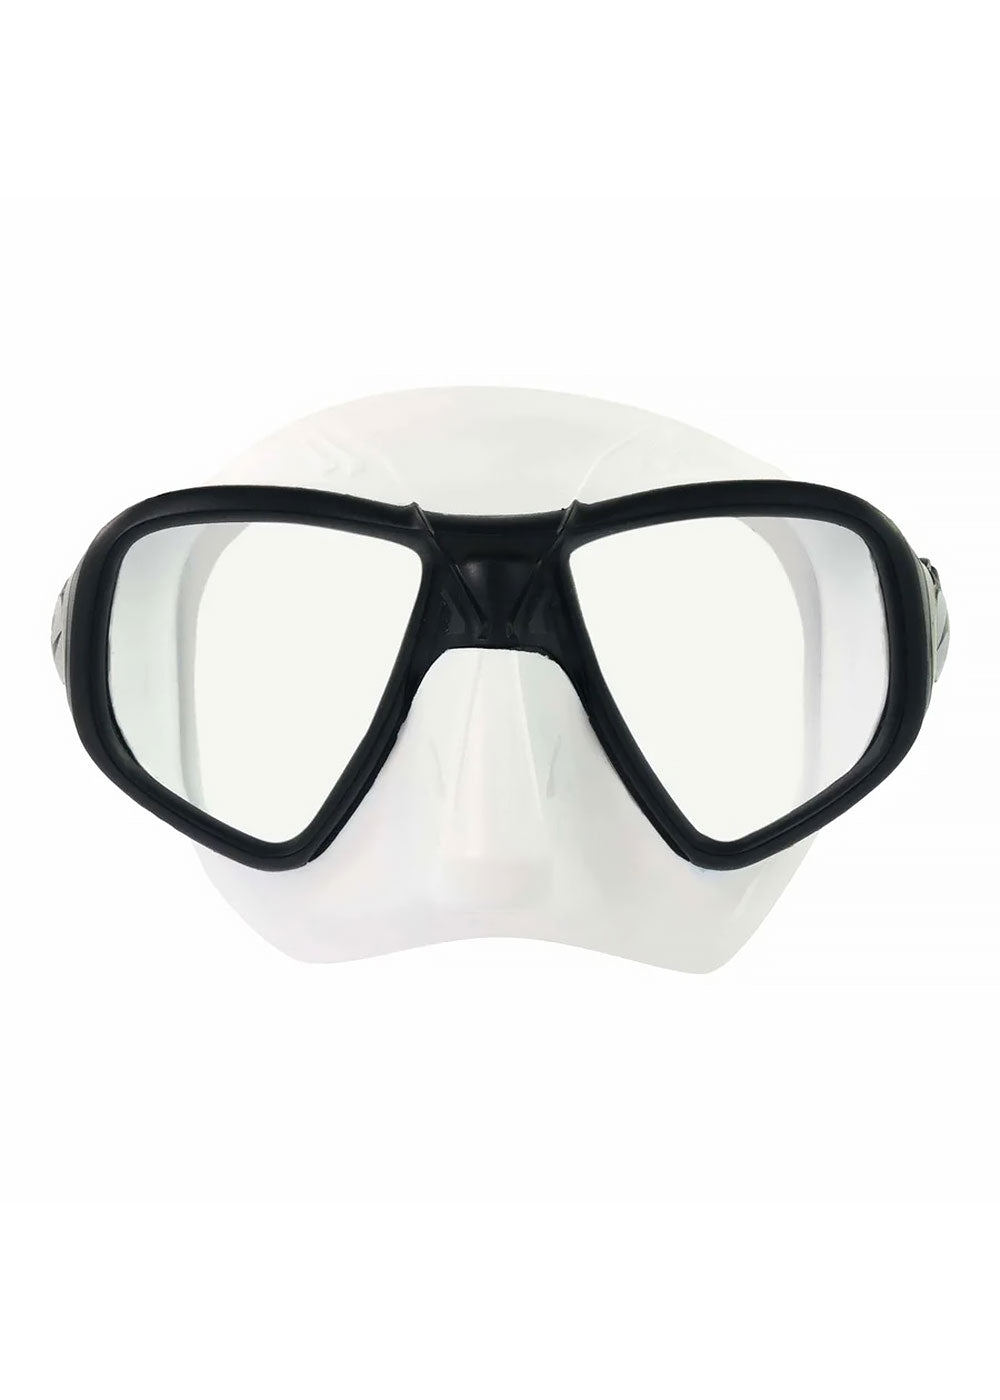 Aqua Lung Micro X Mask - White